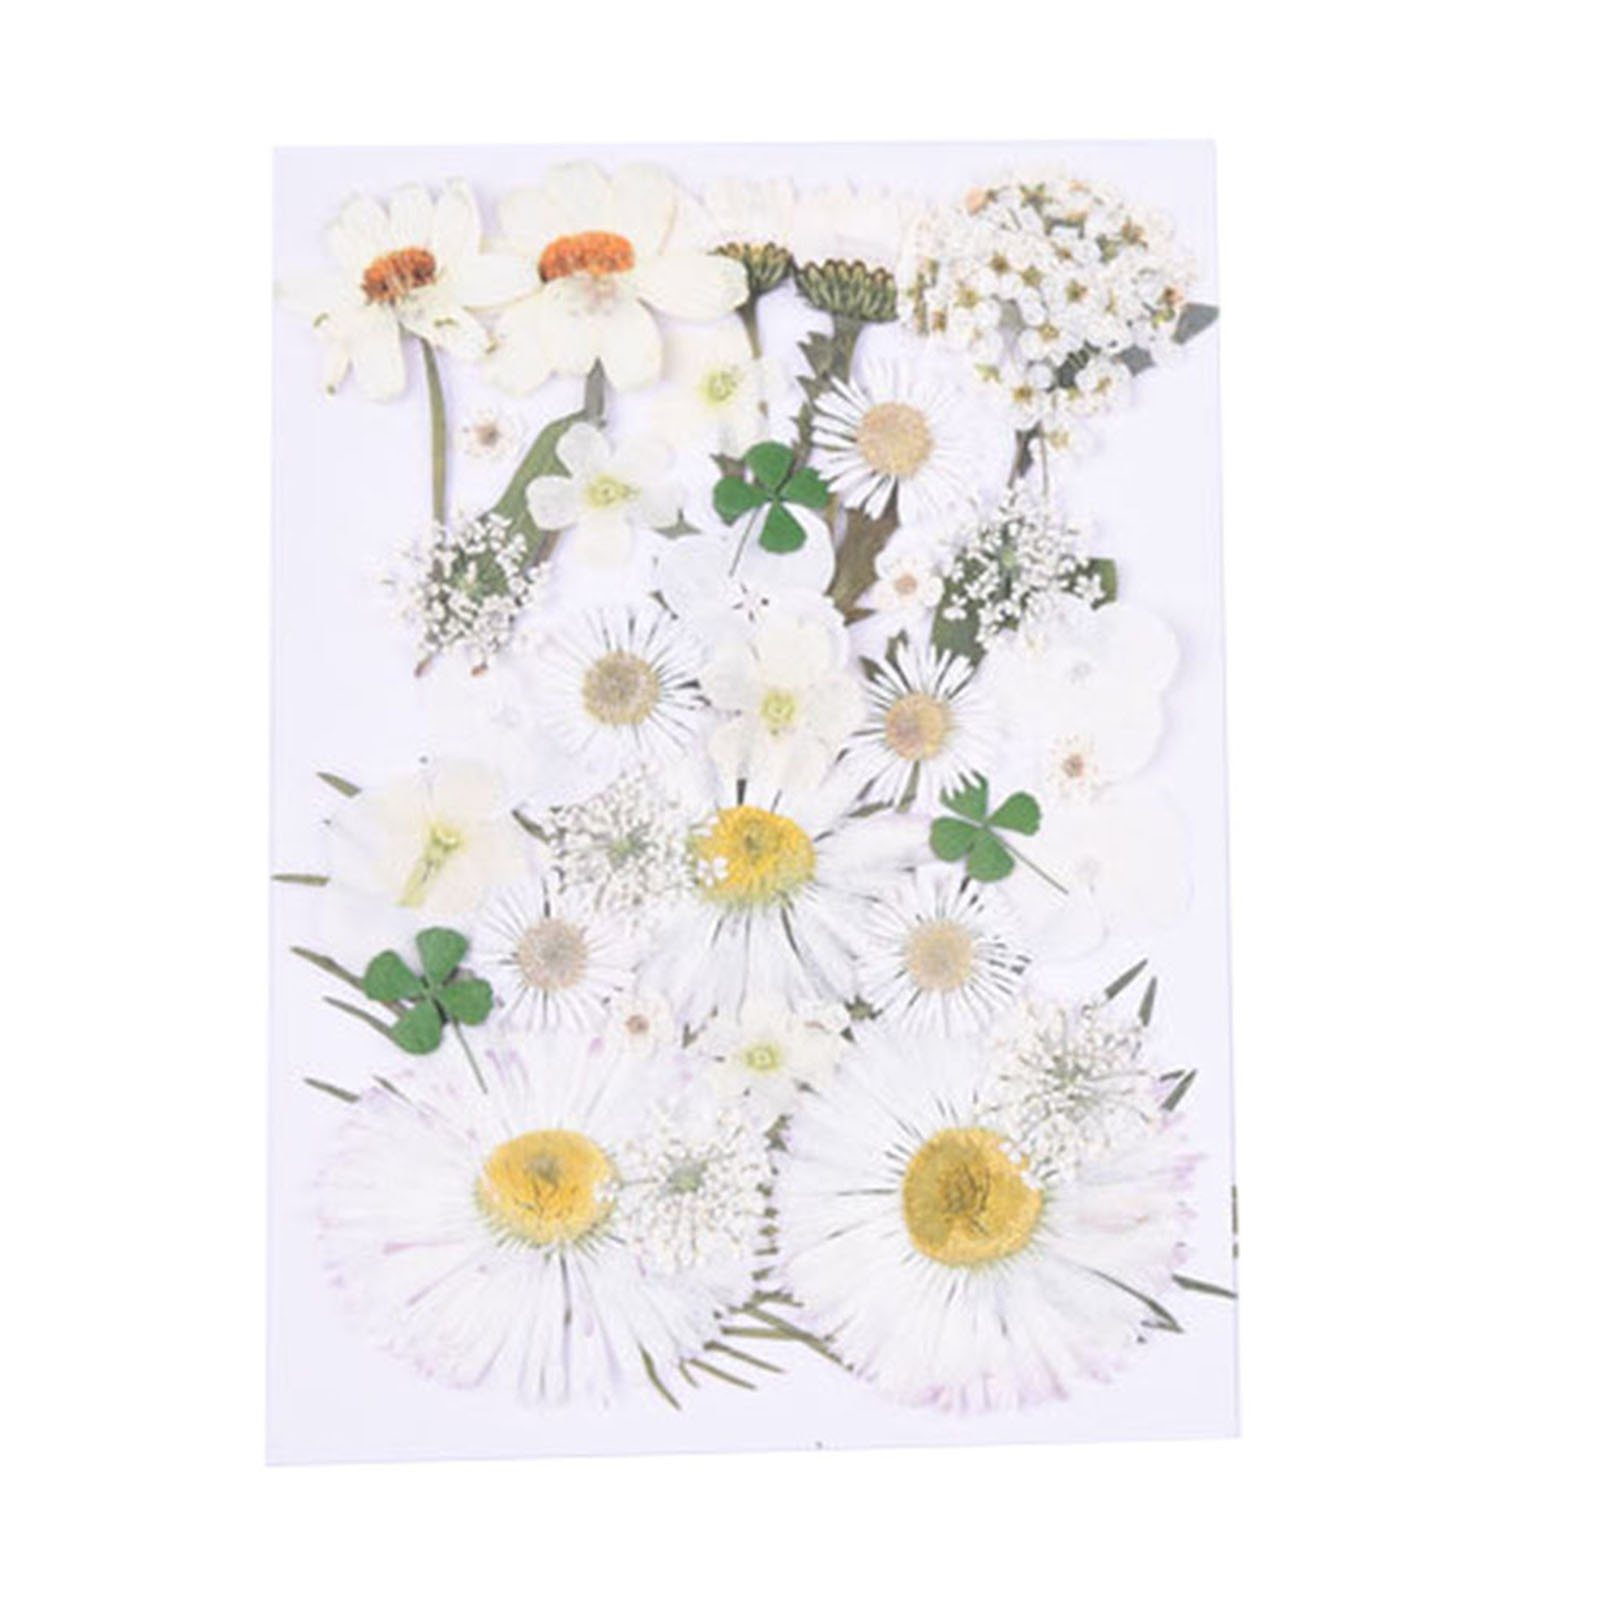 Zum Blusmart white green Getrocknetes, Trockenblumen-Set Blumen, Gepresste Trockenblume Selbermachen,